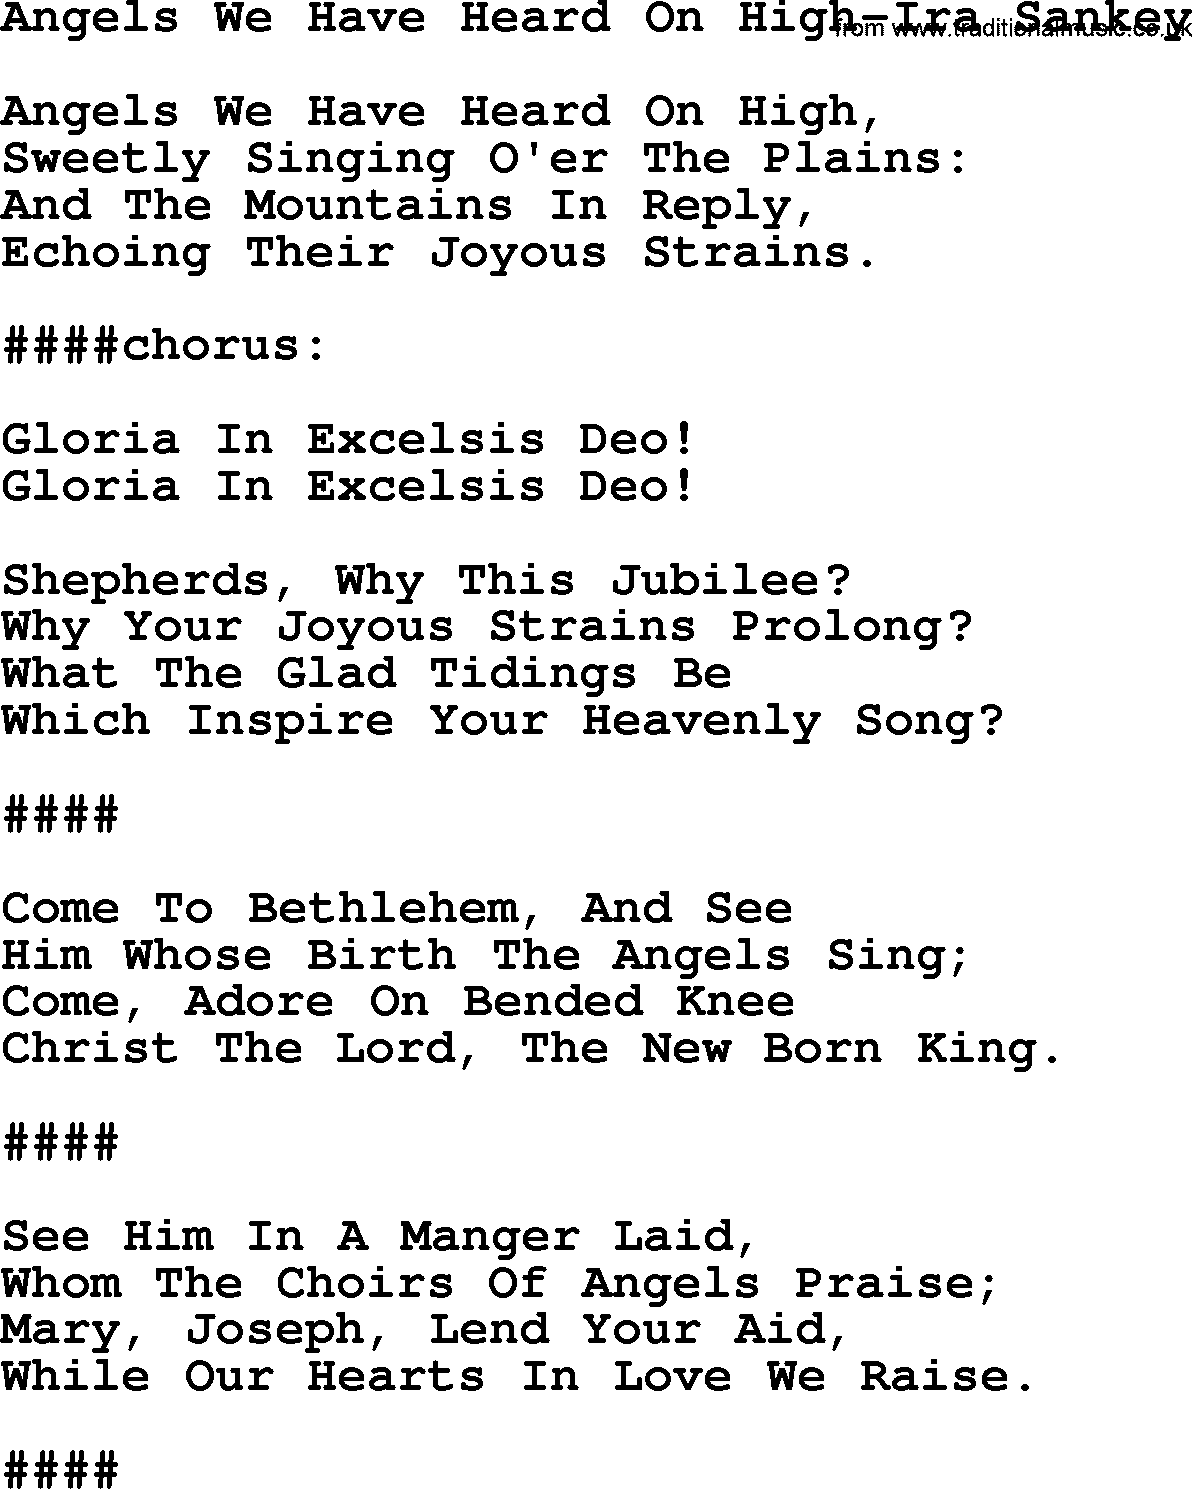 Ira Sankey hymn: Angels We Have Heard On High-Ira Sankey, lyrics